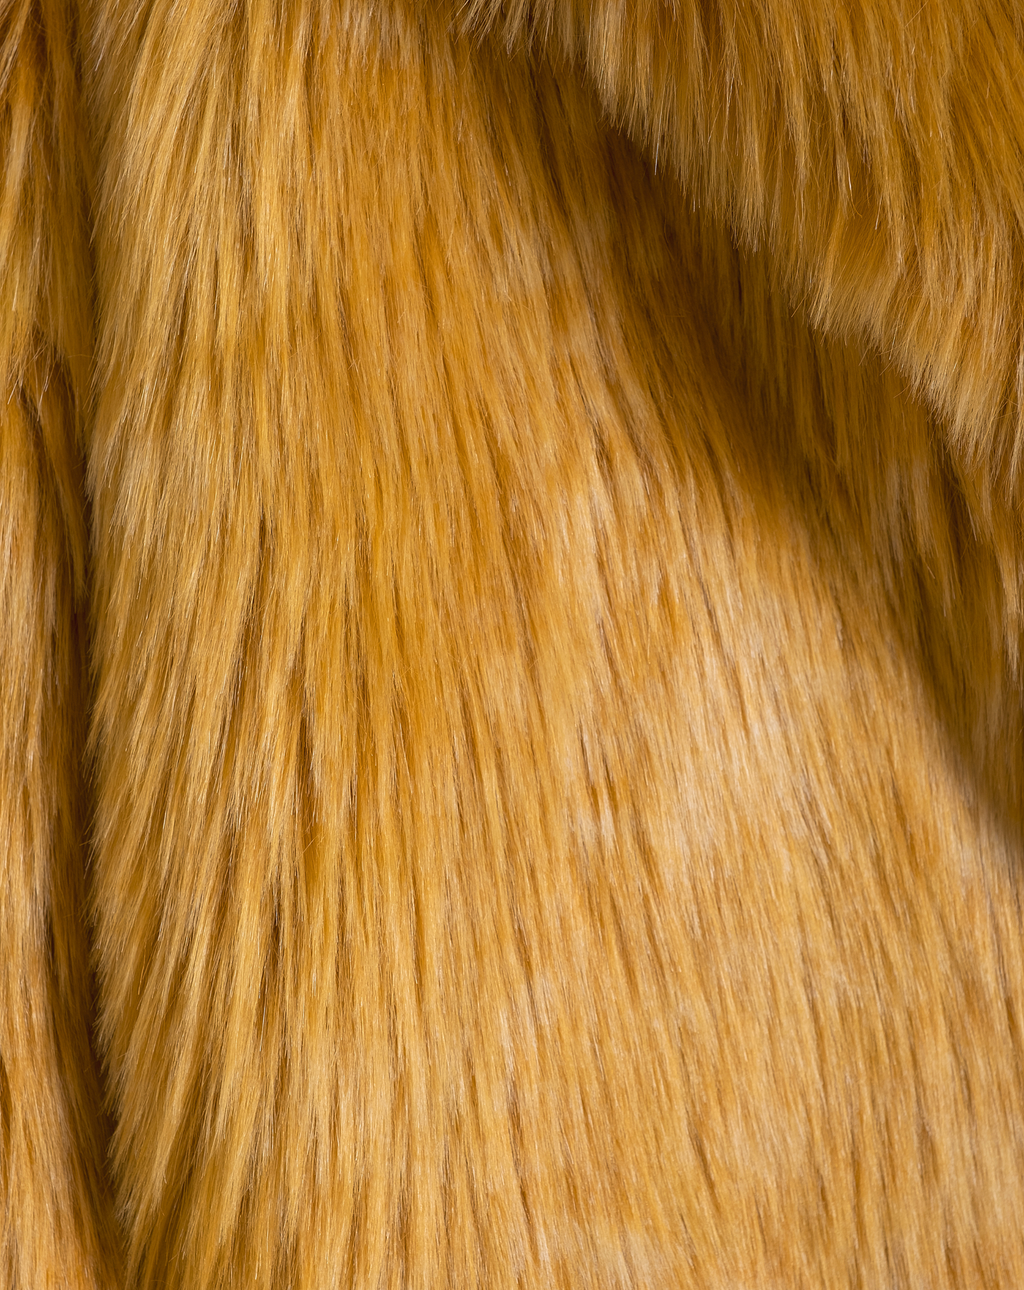 OVER THE POP - Pelliccia oversize in faux fur giallo